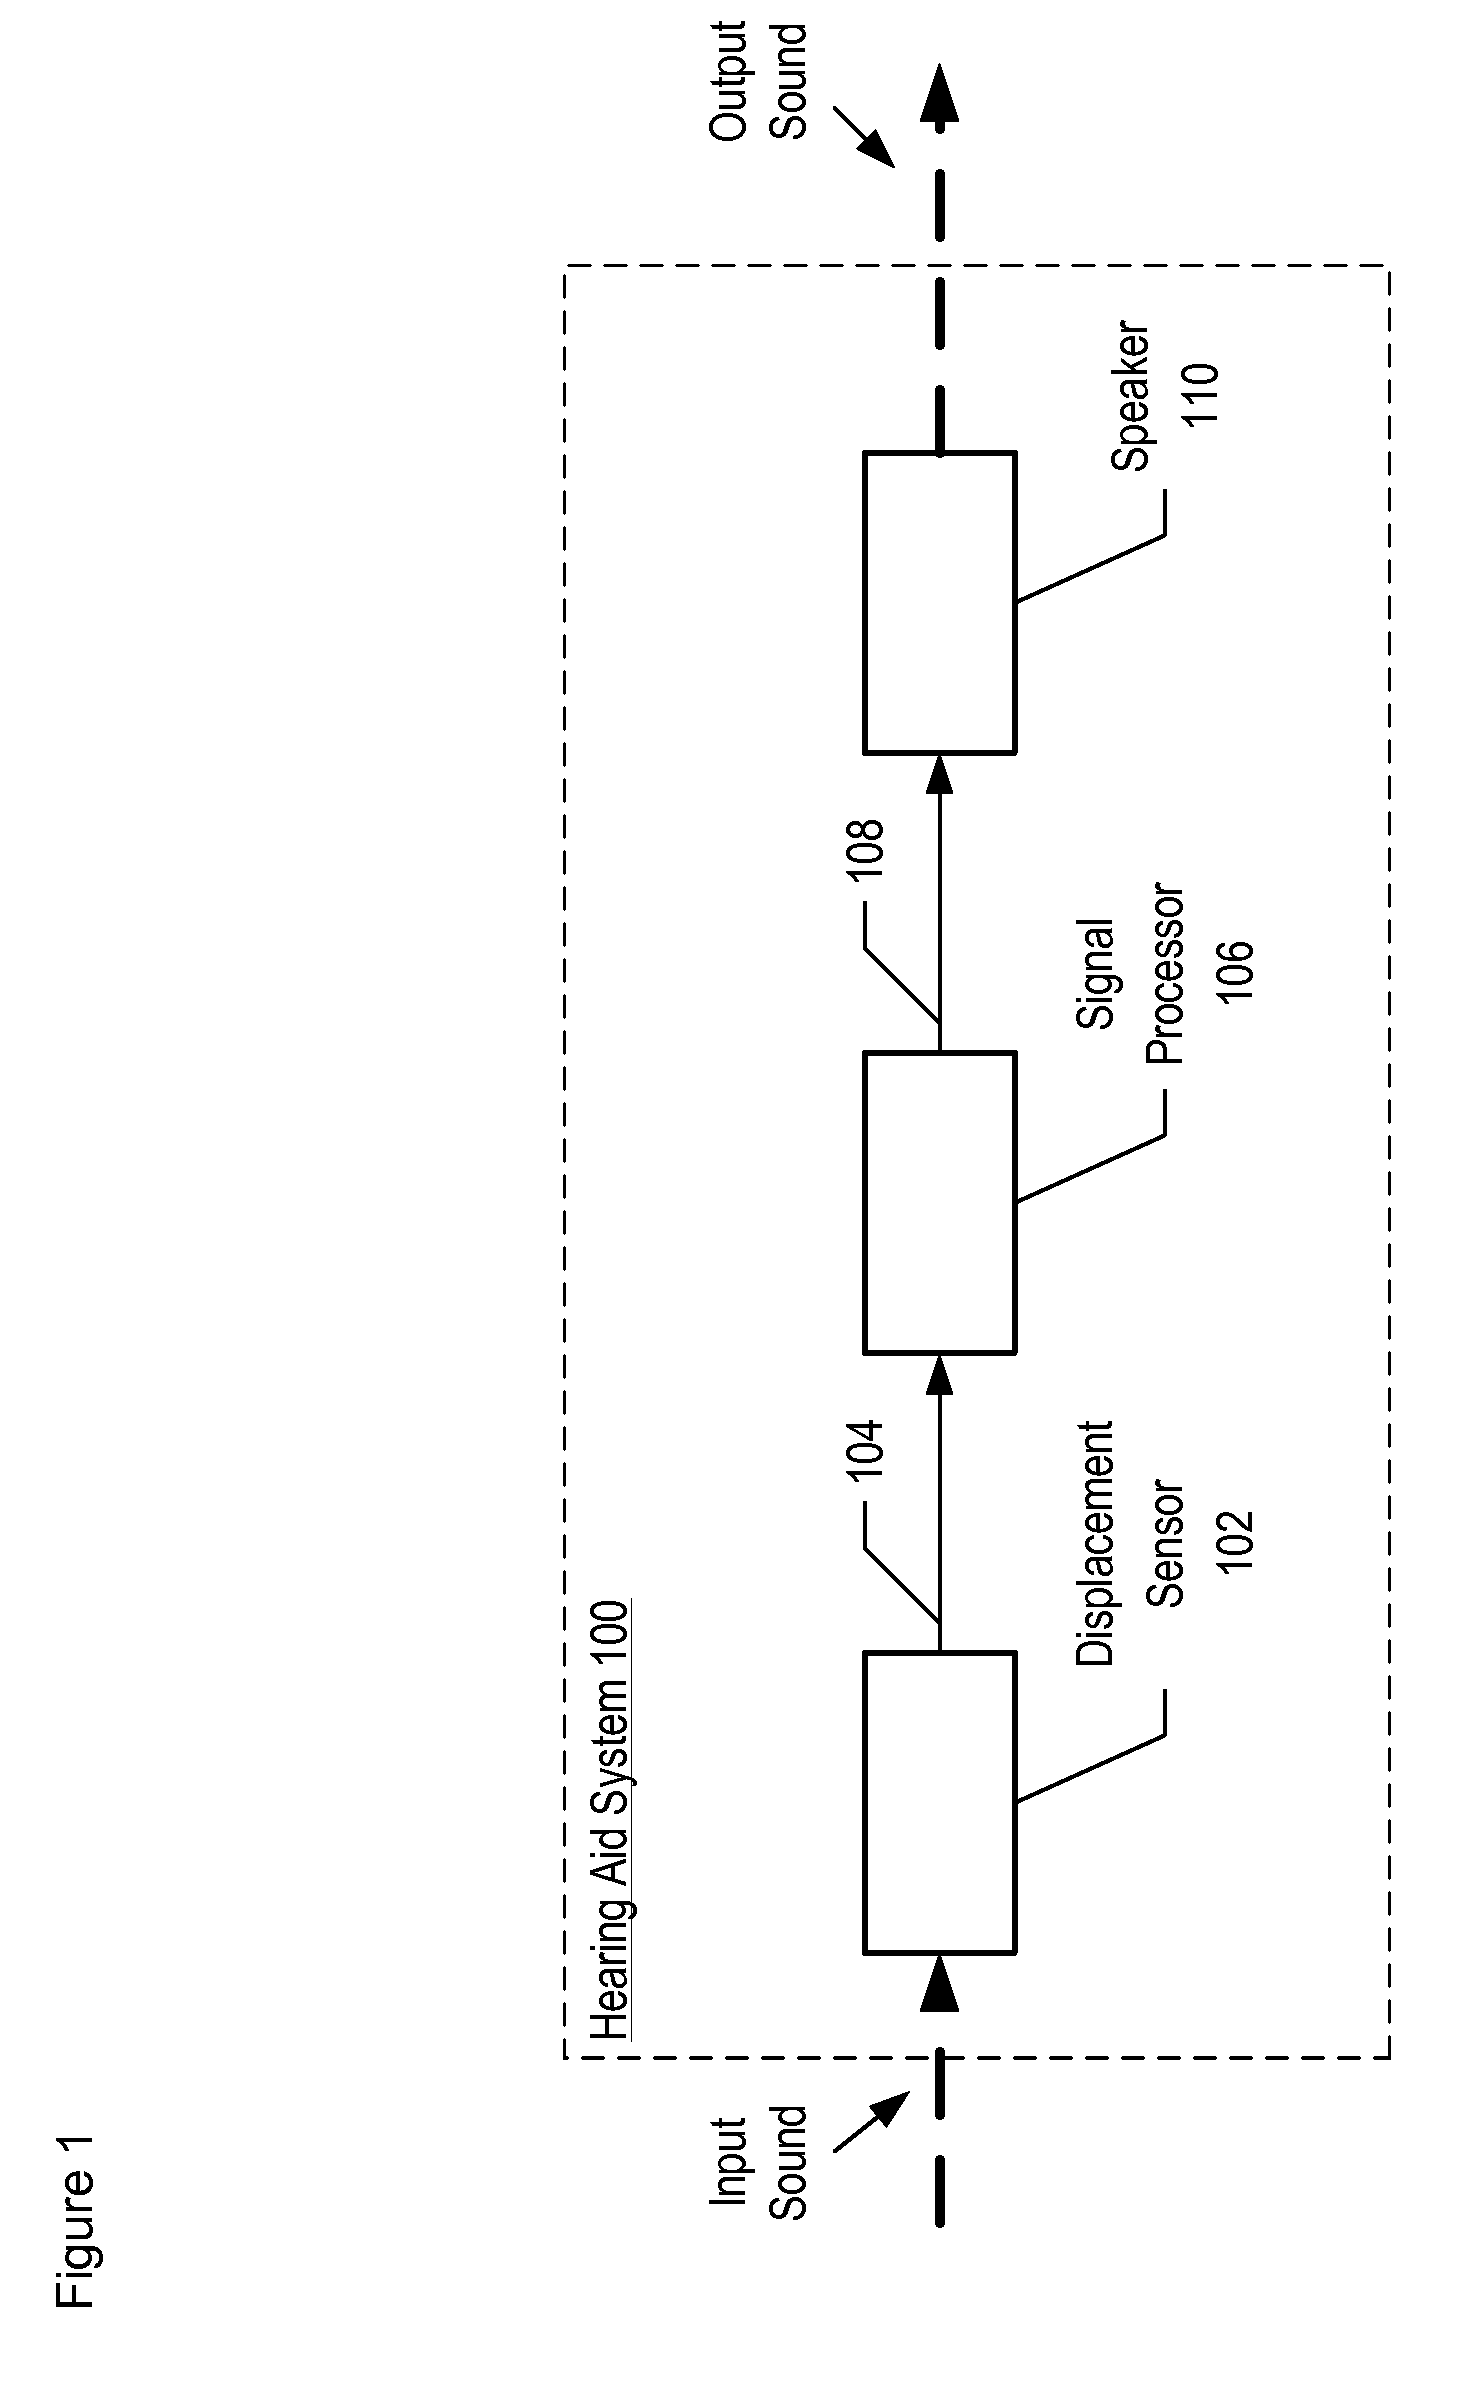 Optical displacement sensor comprising a wavelength-tunable optical source